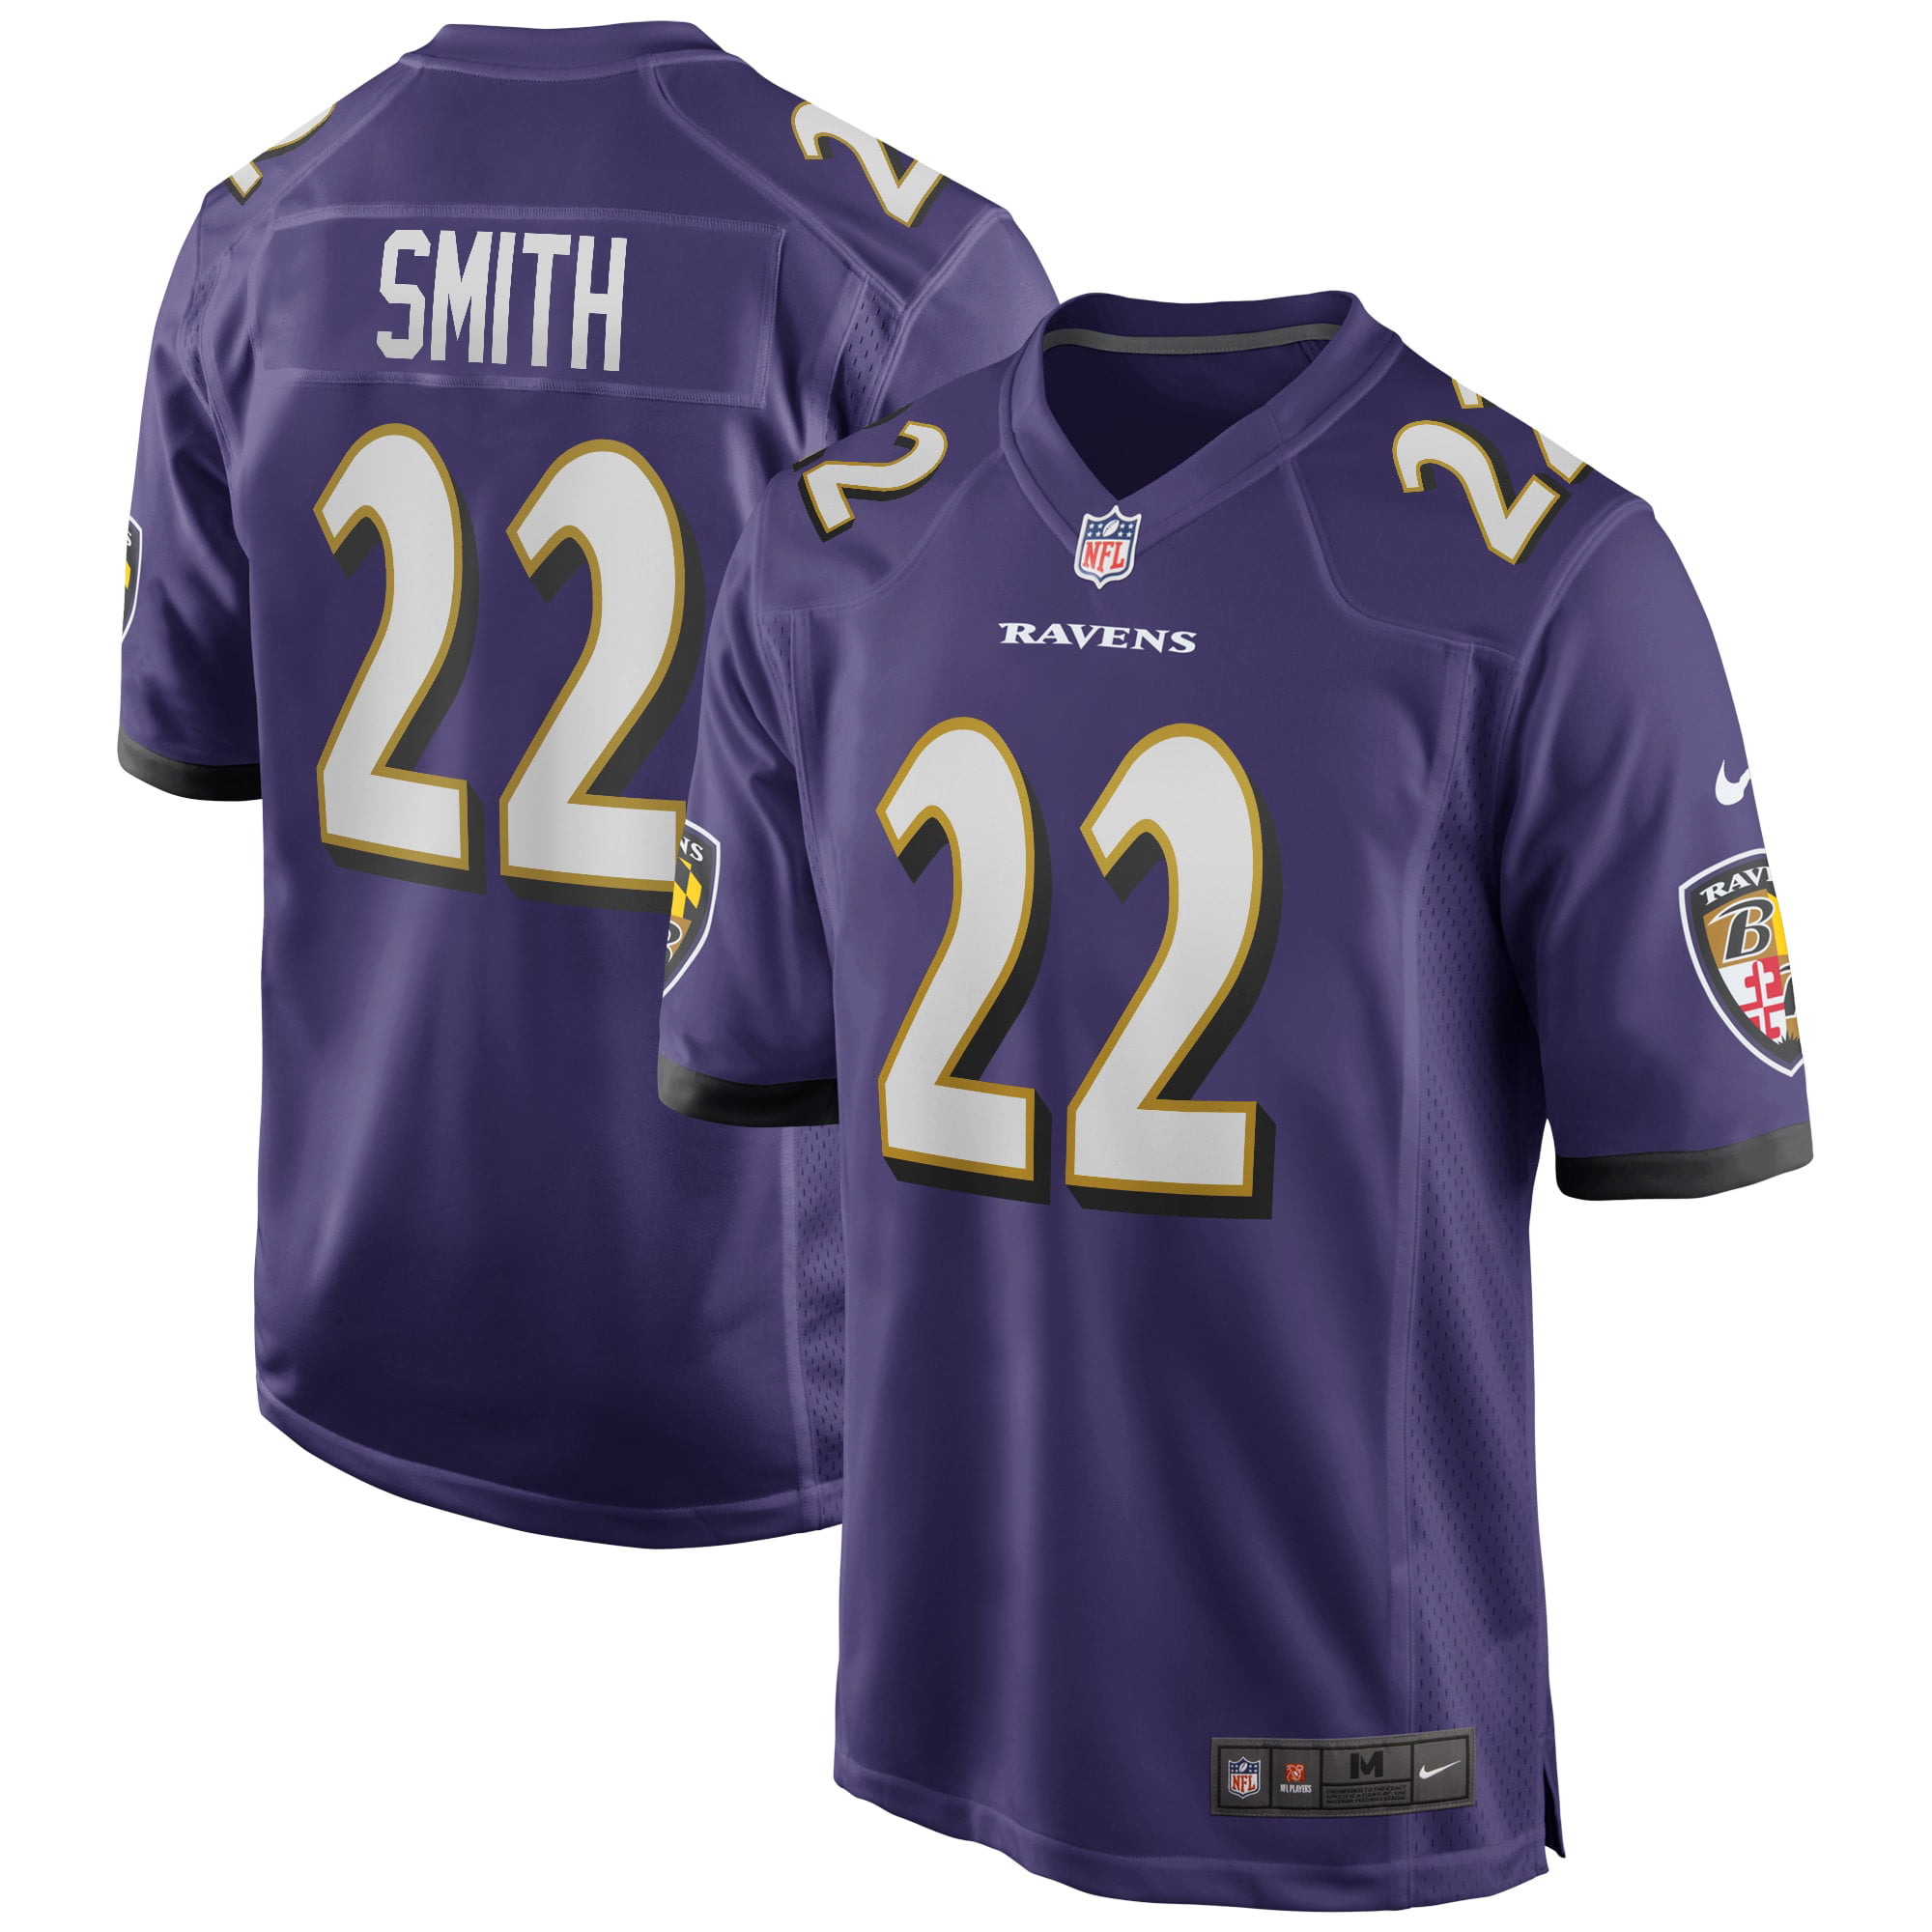 Jimmy Smith Baltimore Ravens Nike Team Game Jersey - Purple - Walmart.com